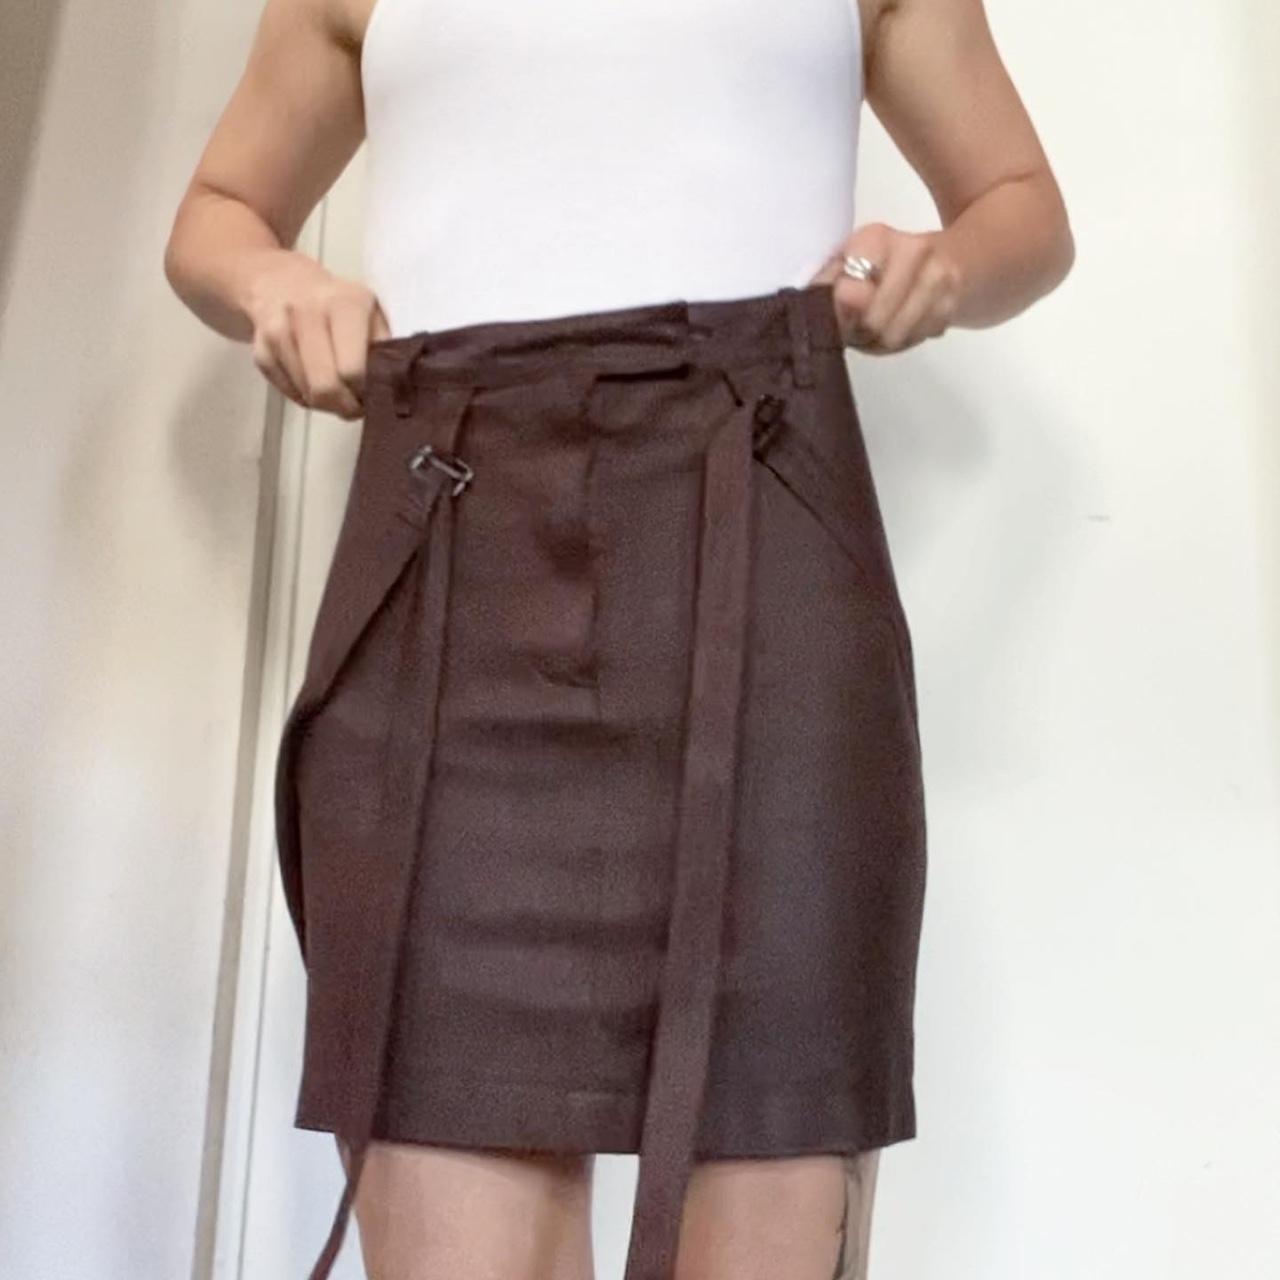 Ann Demeulemeester bondage leather skirt. Size 34 EU...